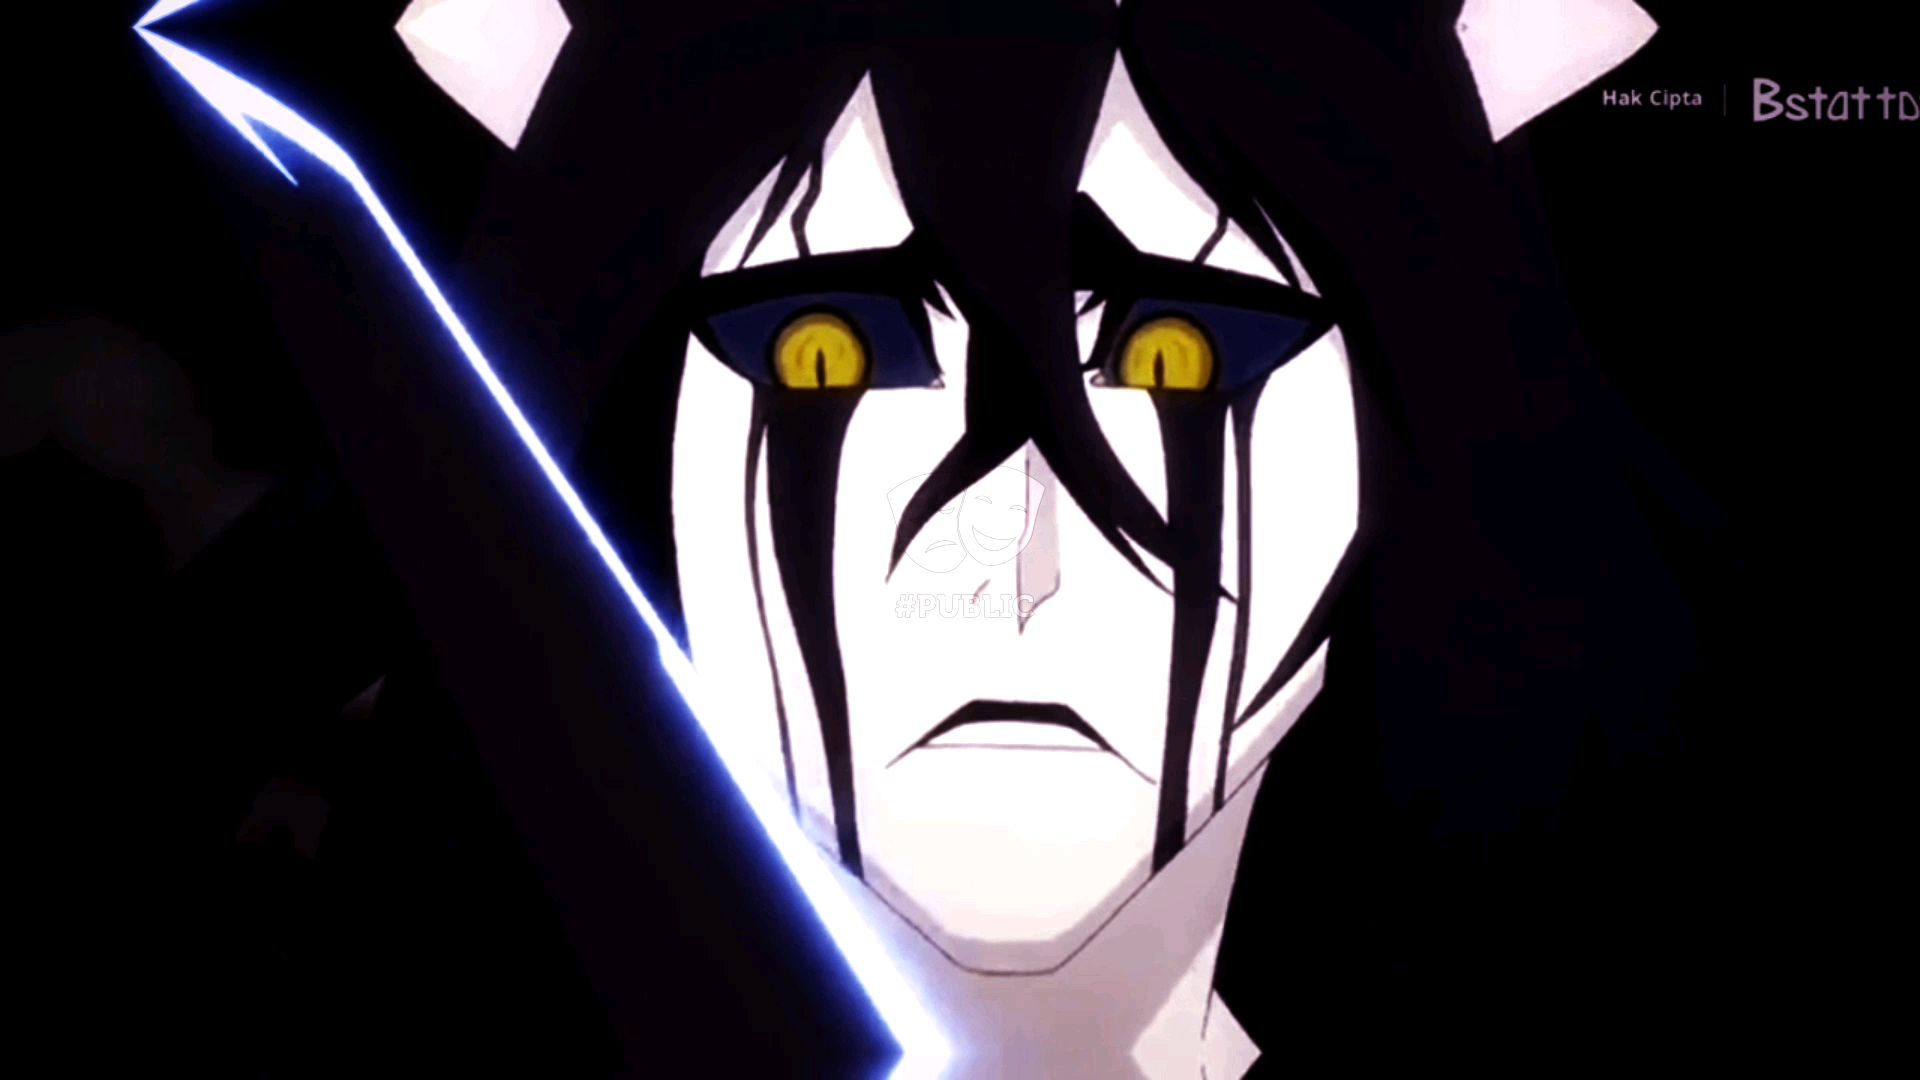 Cero for Ulquiorra :(  Bleach episodes, Bleach amv, Anime